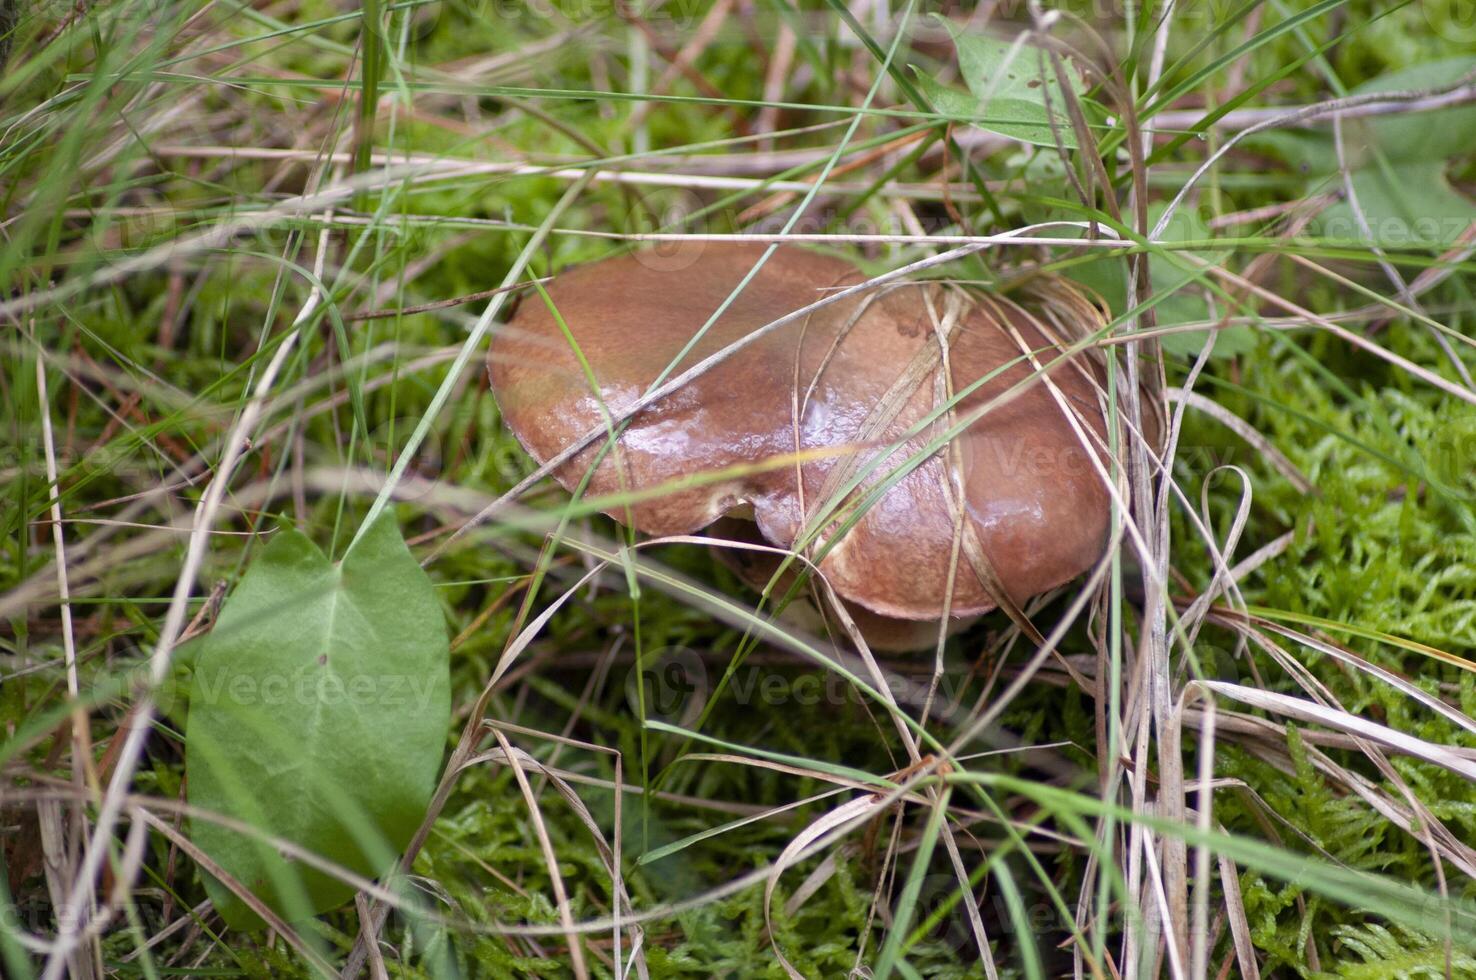 fresh butterdish edible mushroom among the grass, autumn harvest in the forest photo